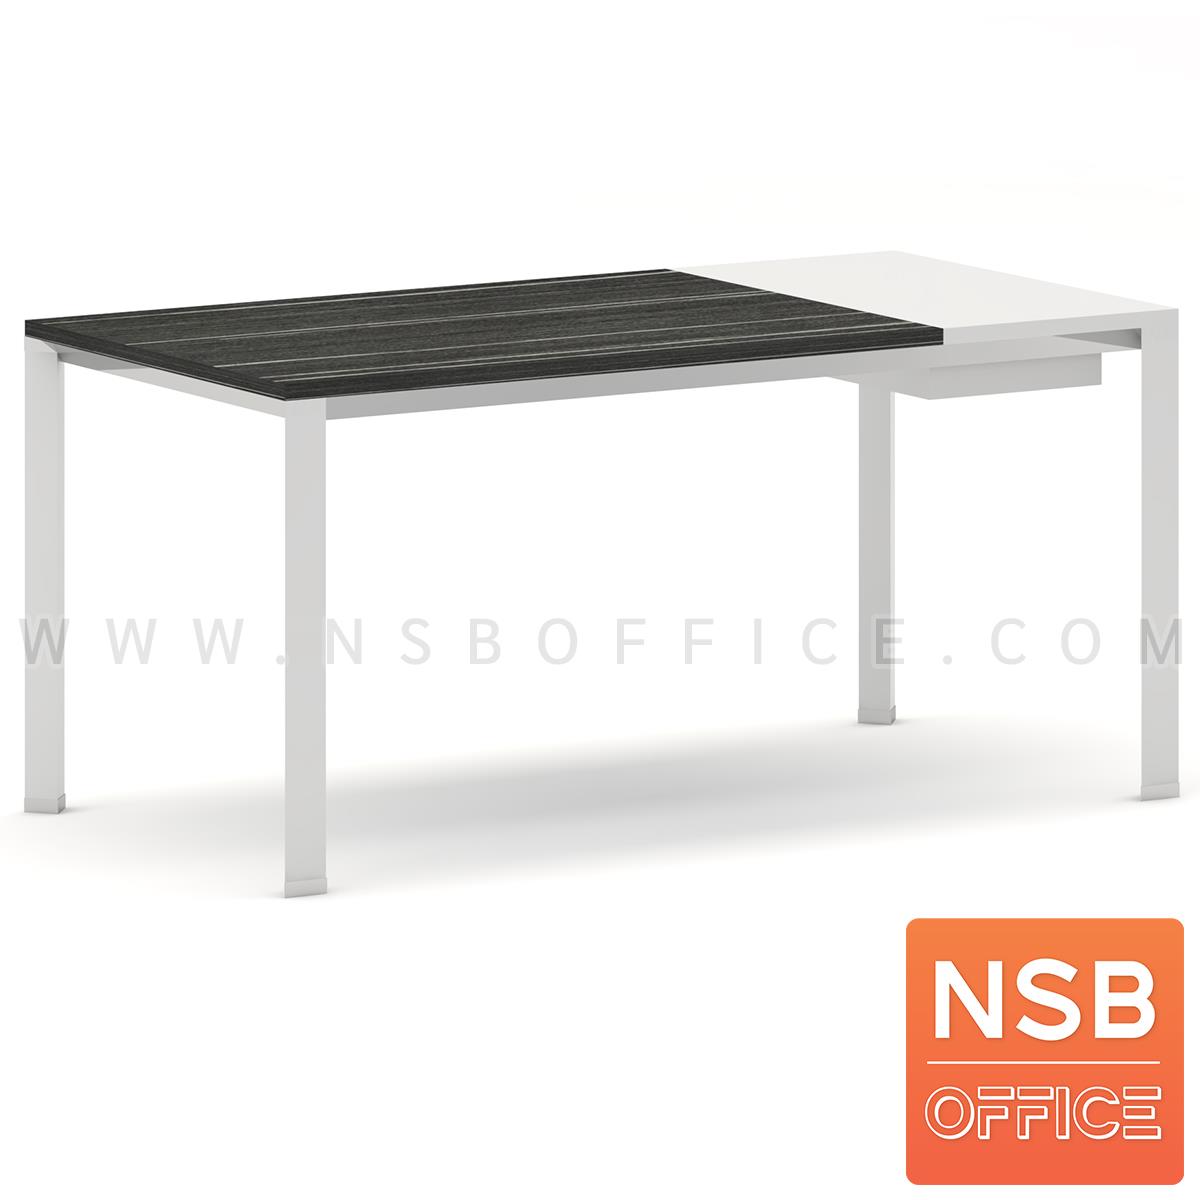 A28A001:โต๊ะผู้บริหารทรงสี่เหลี่ยมทูโทน รุ่น HB-DK02-1680  ขนาด 160W cm.  ขาเหล็กสีขาว